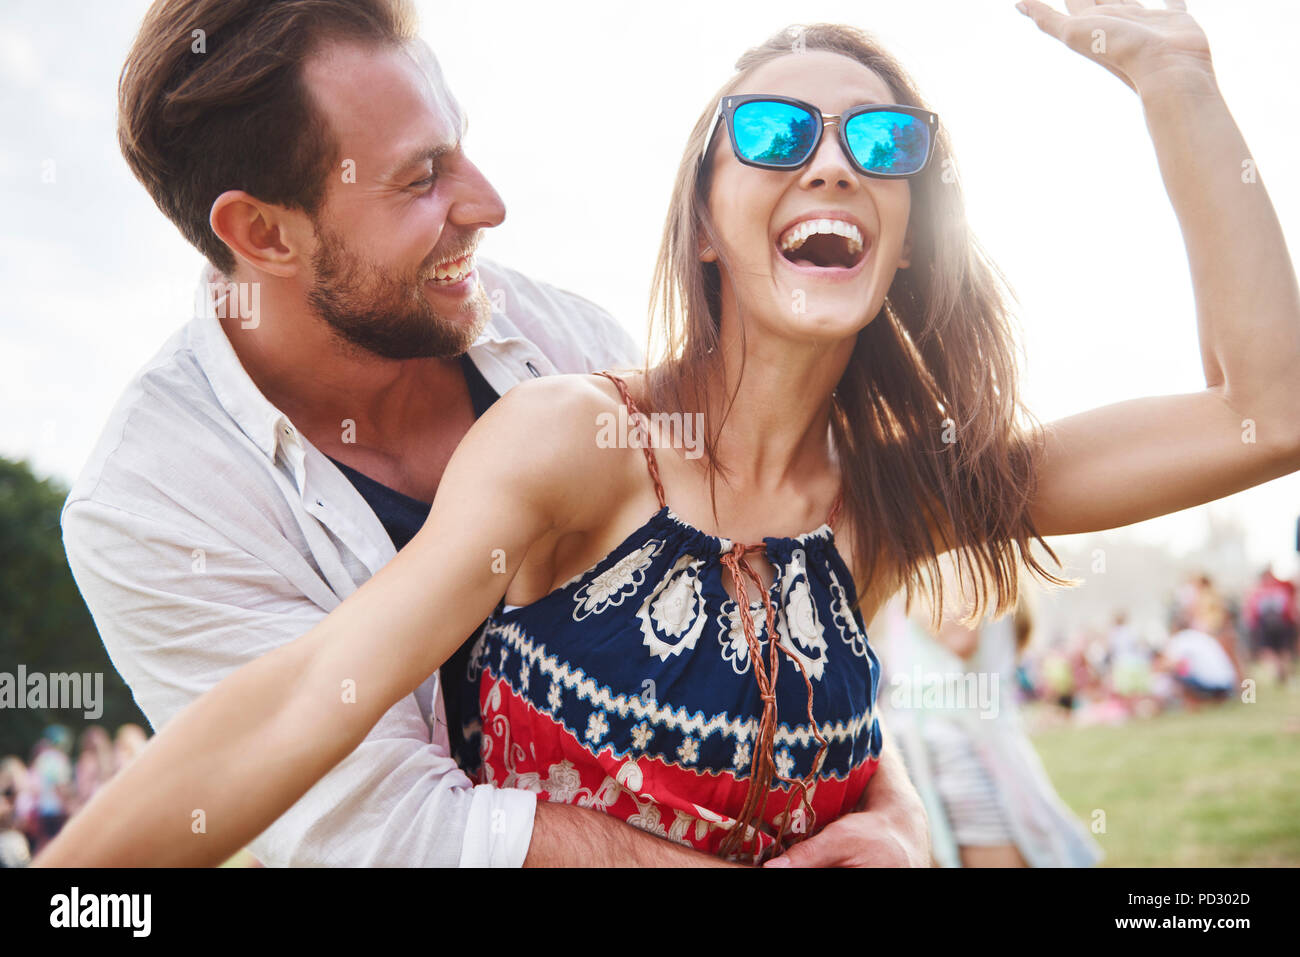 Couple laughing and enjoying music festival Stock Photo